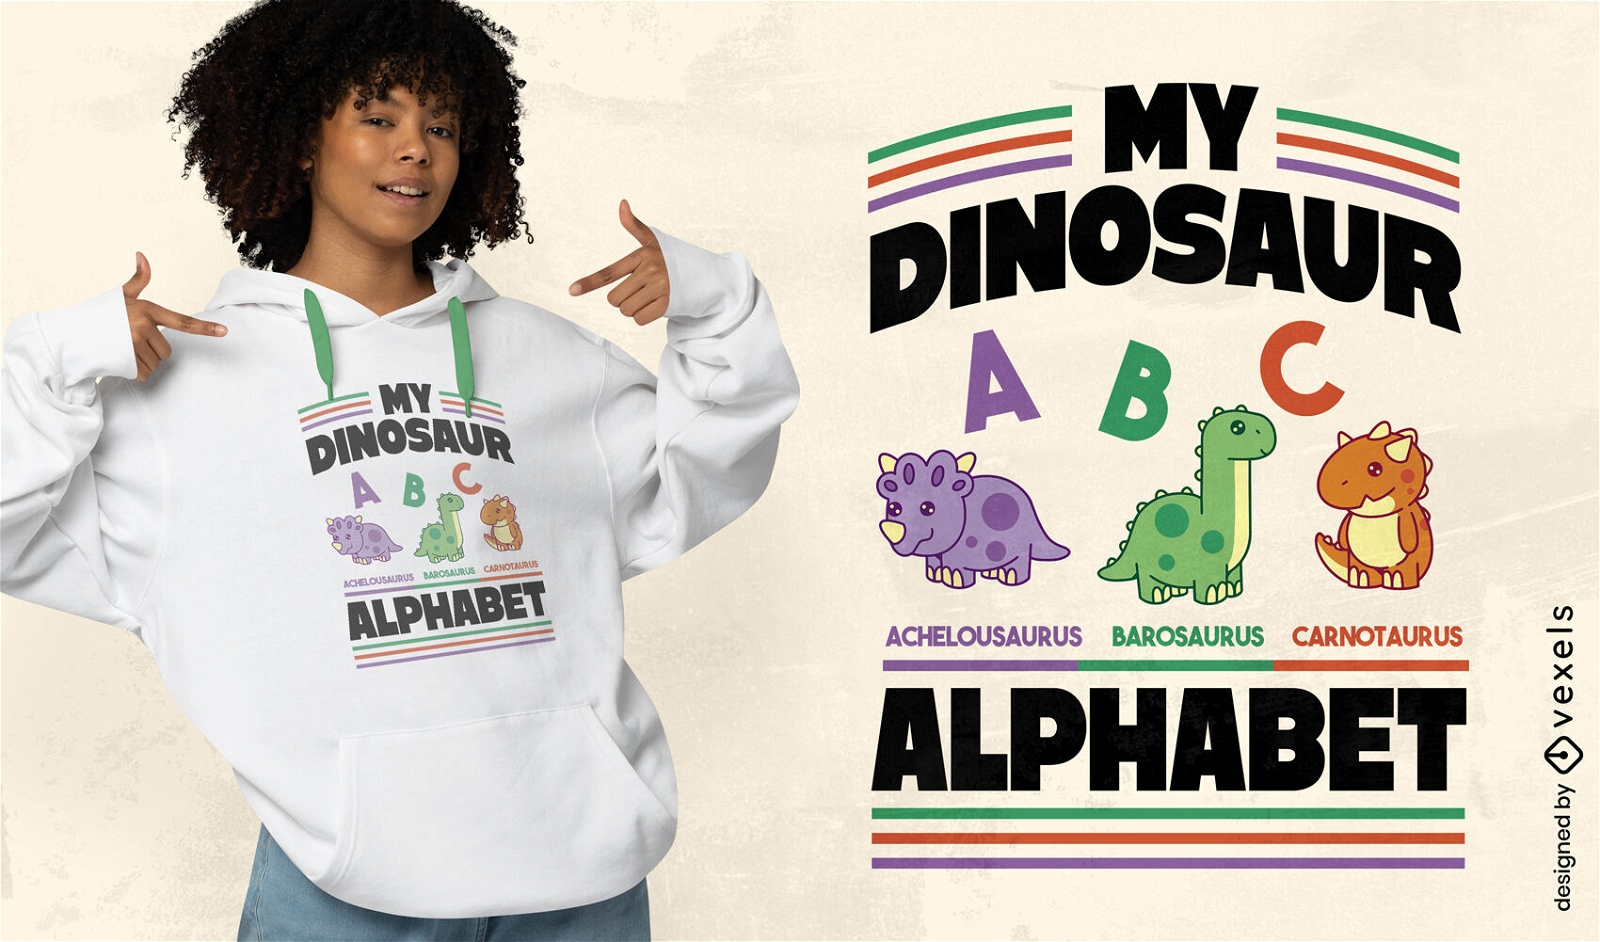 Dinosaurier-ABC-Alphabet-T-Shirt-Design